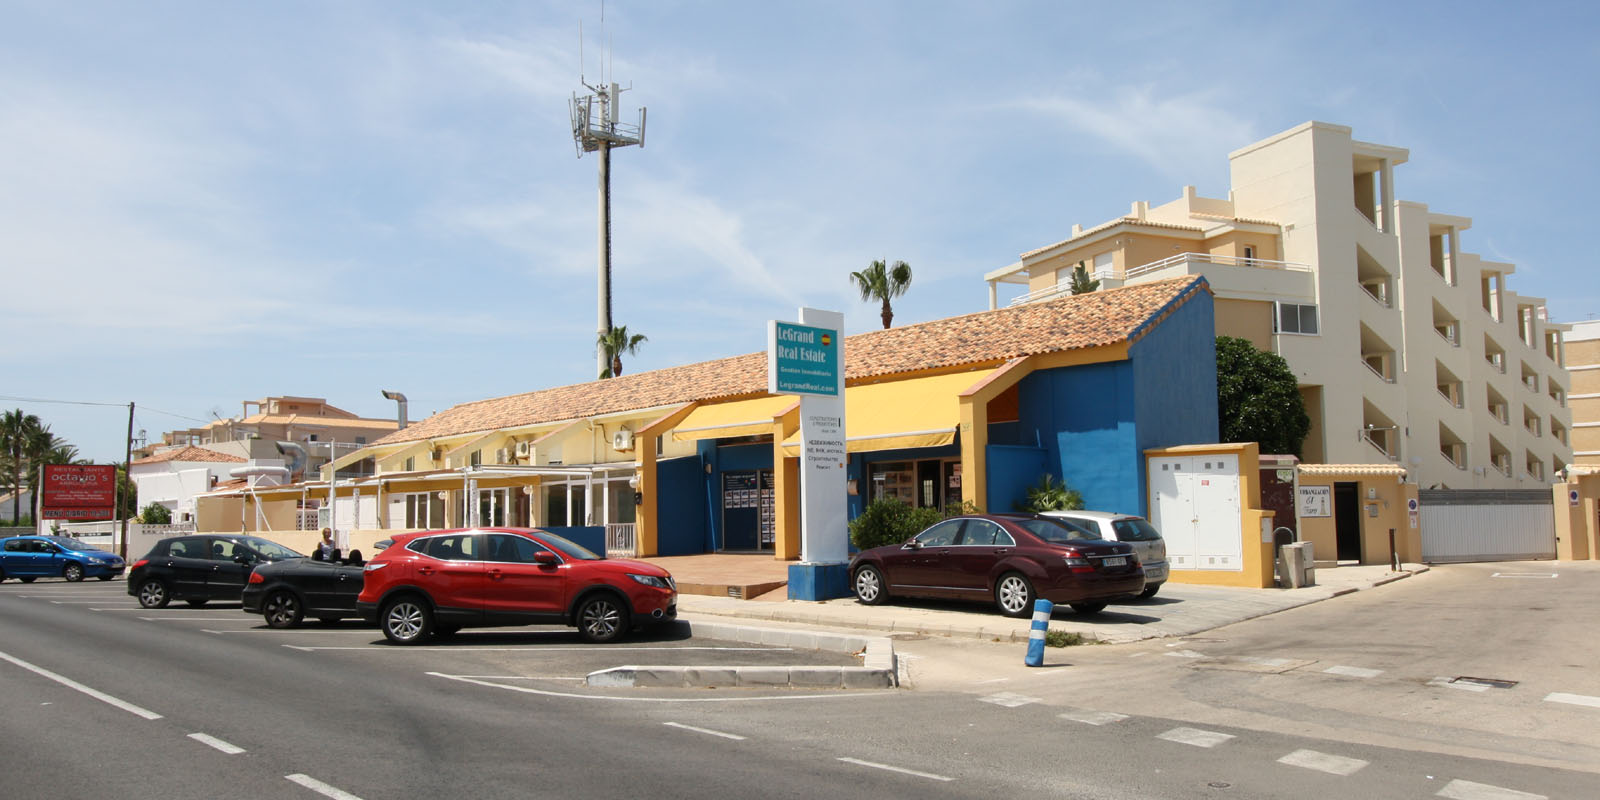 LeGrand Real Estate Immobilie in spanien, Denia